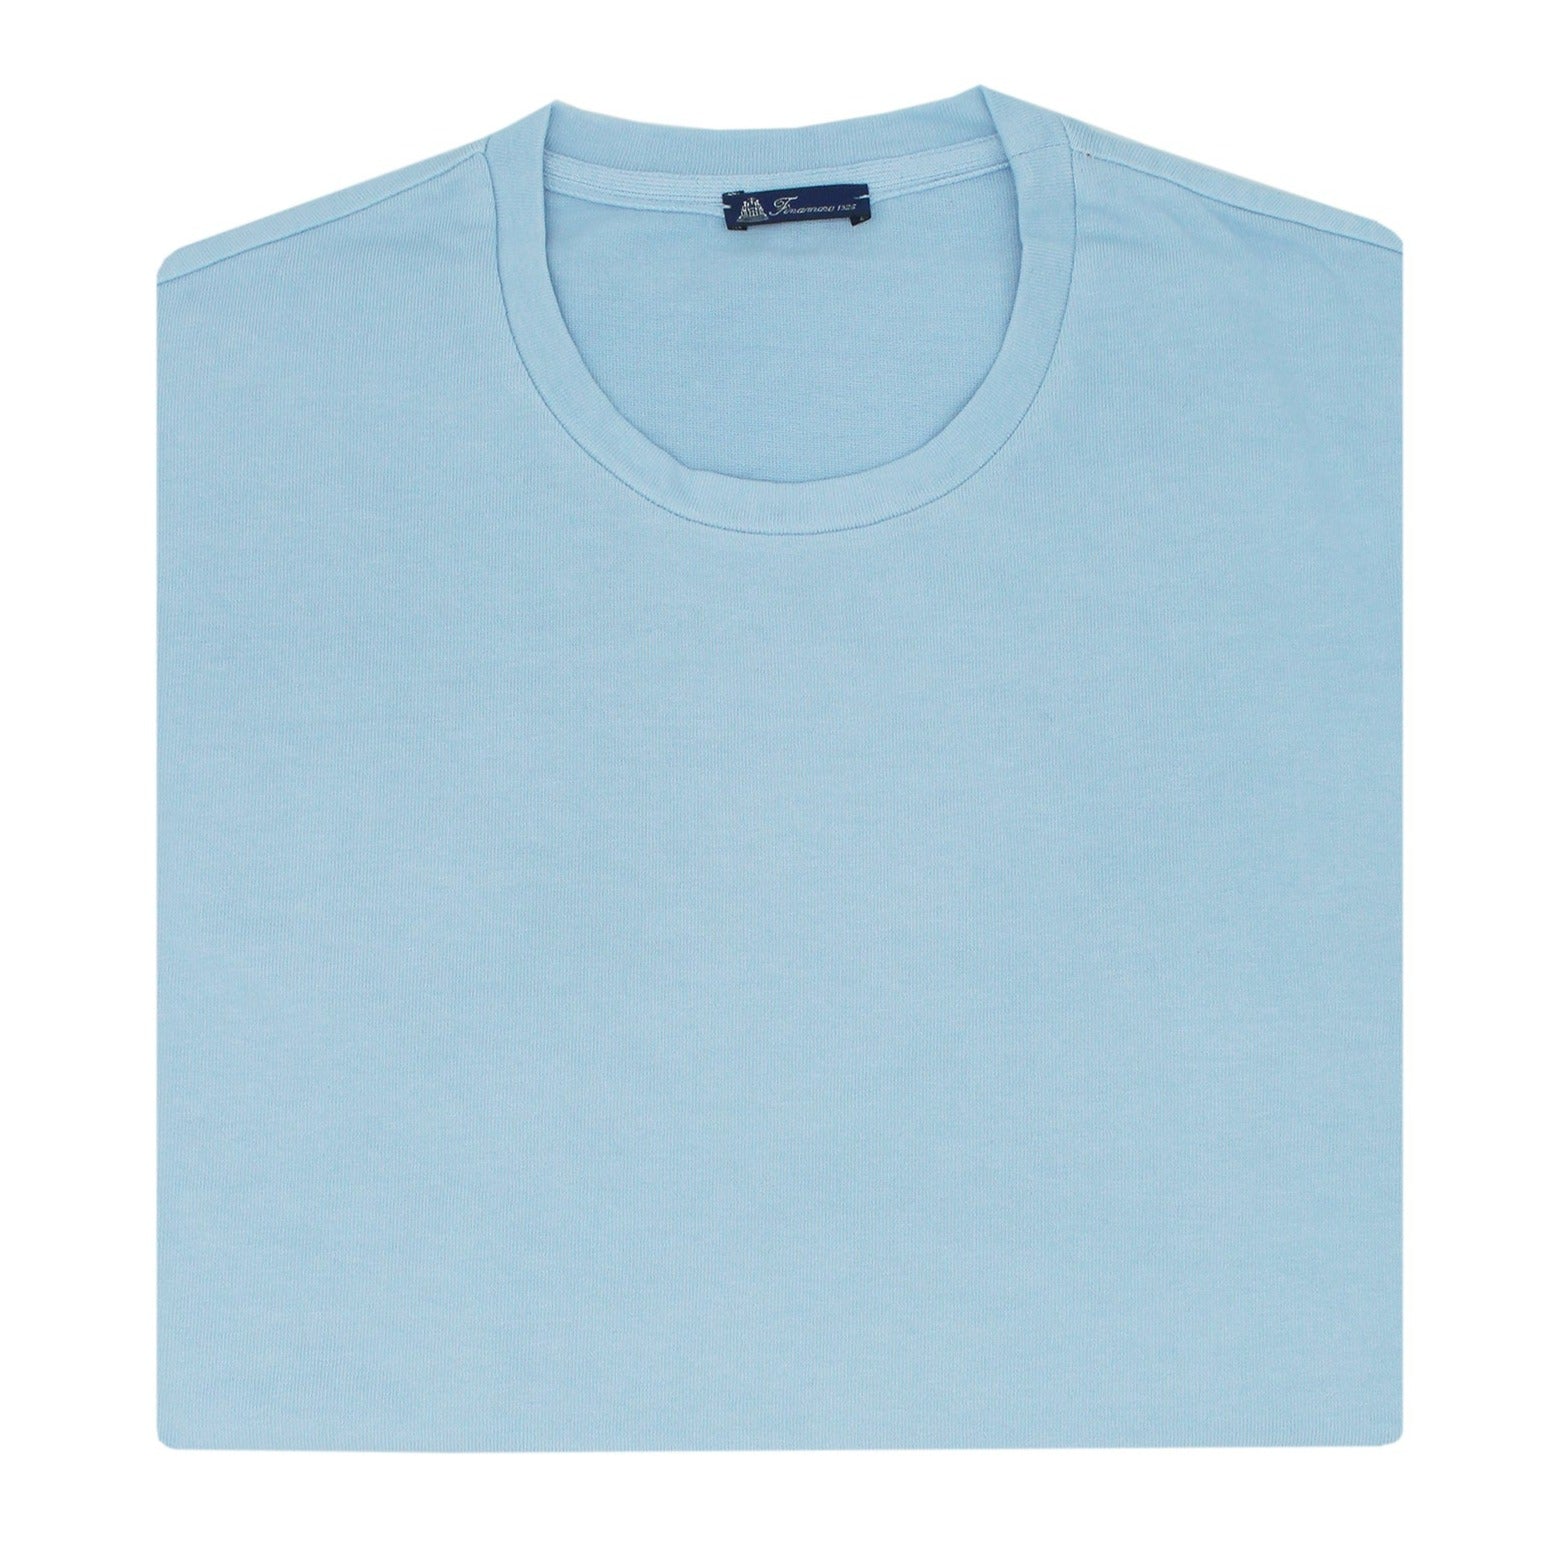 Light blu garment dyed cotton T-shirt with Finamore 1925 logo